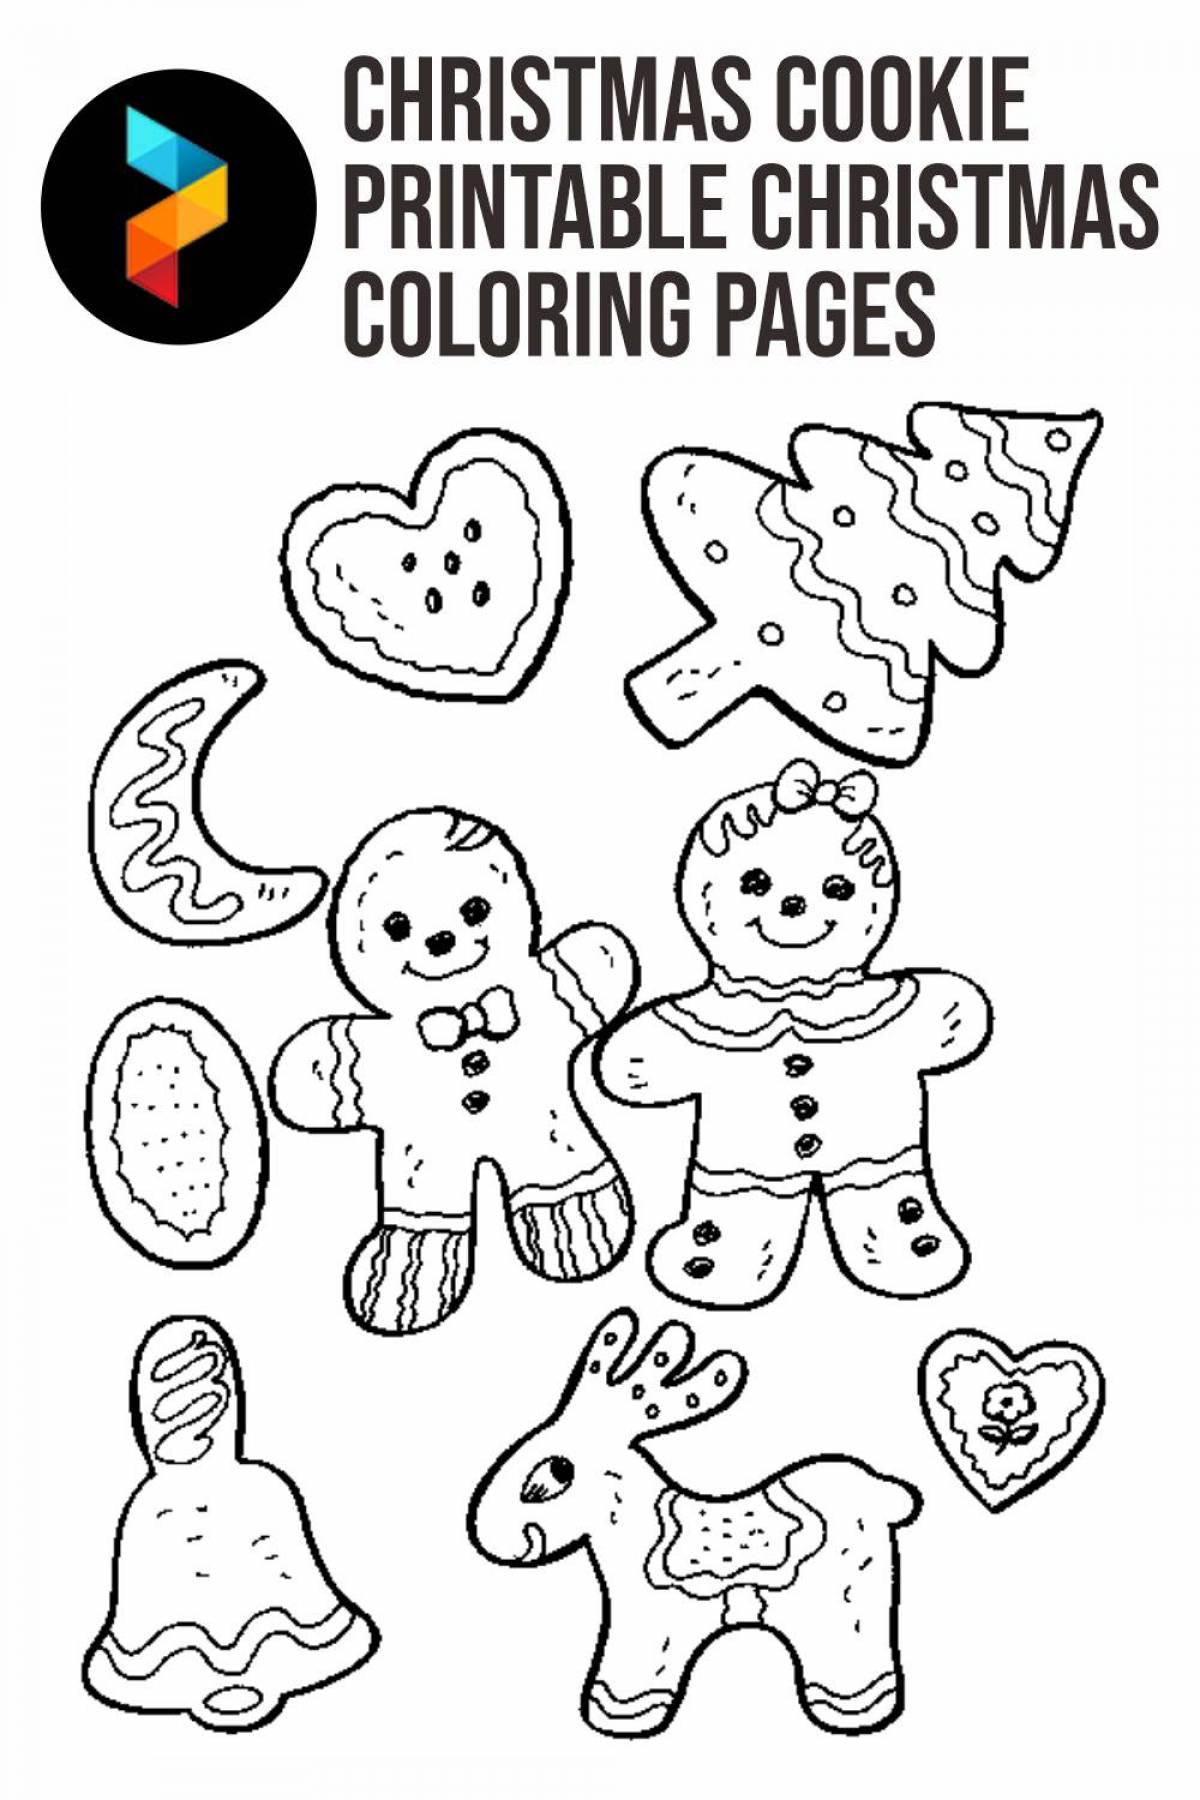 Coloring artistic gingerbread